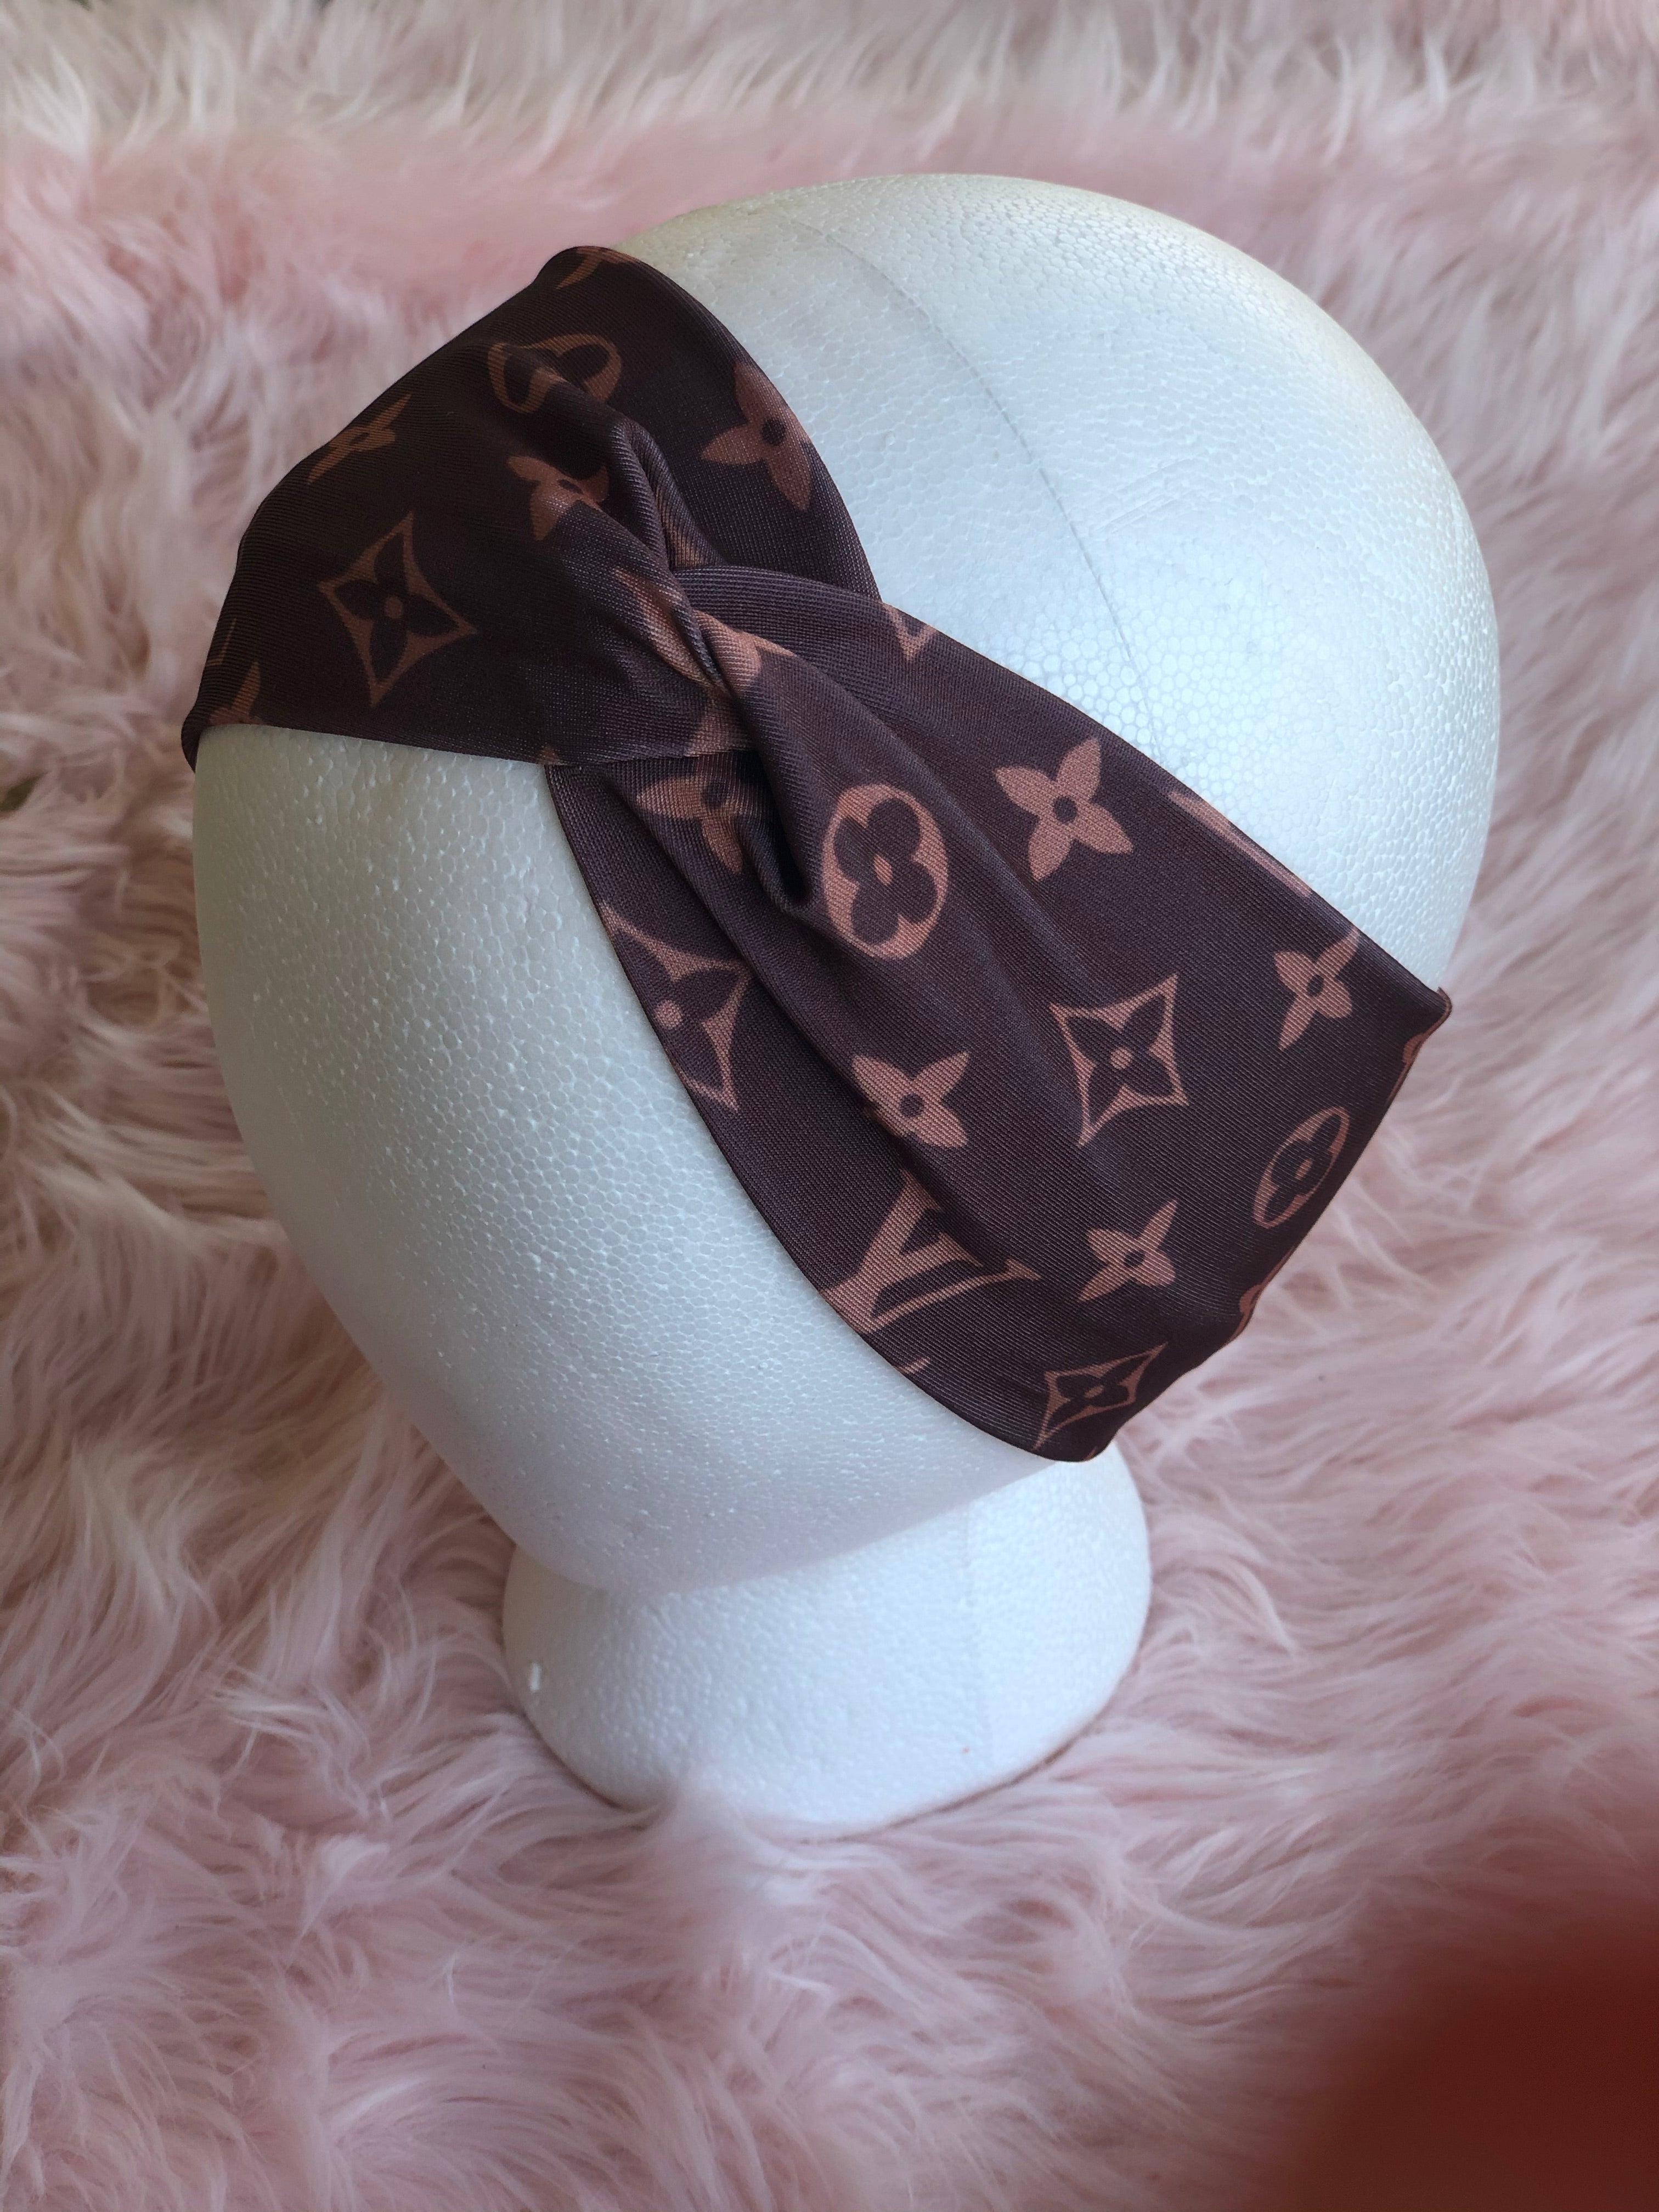 Accessories, Designer Louis Vuitton Nylon Baby Headband Bow